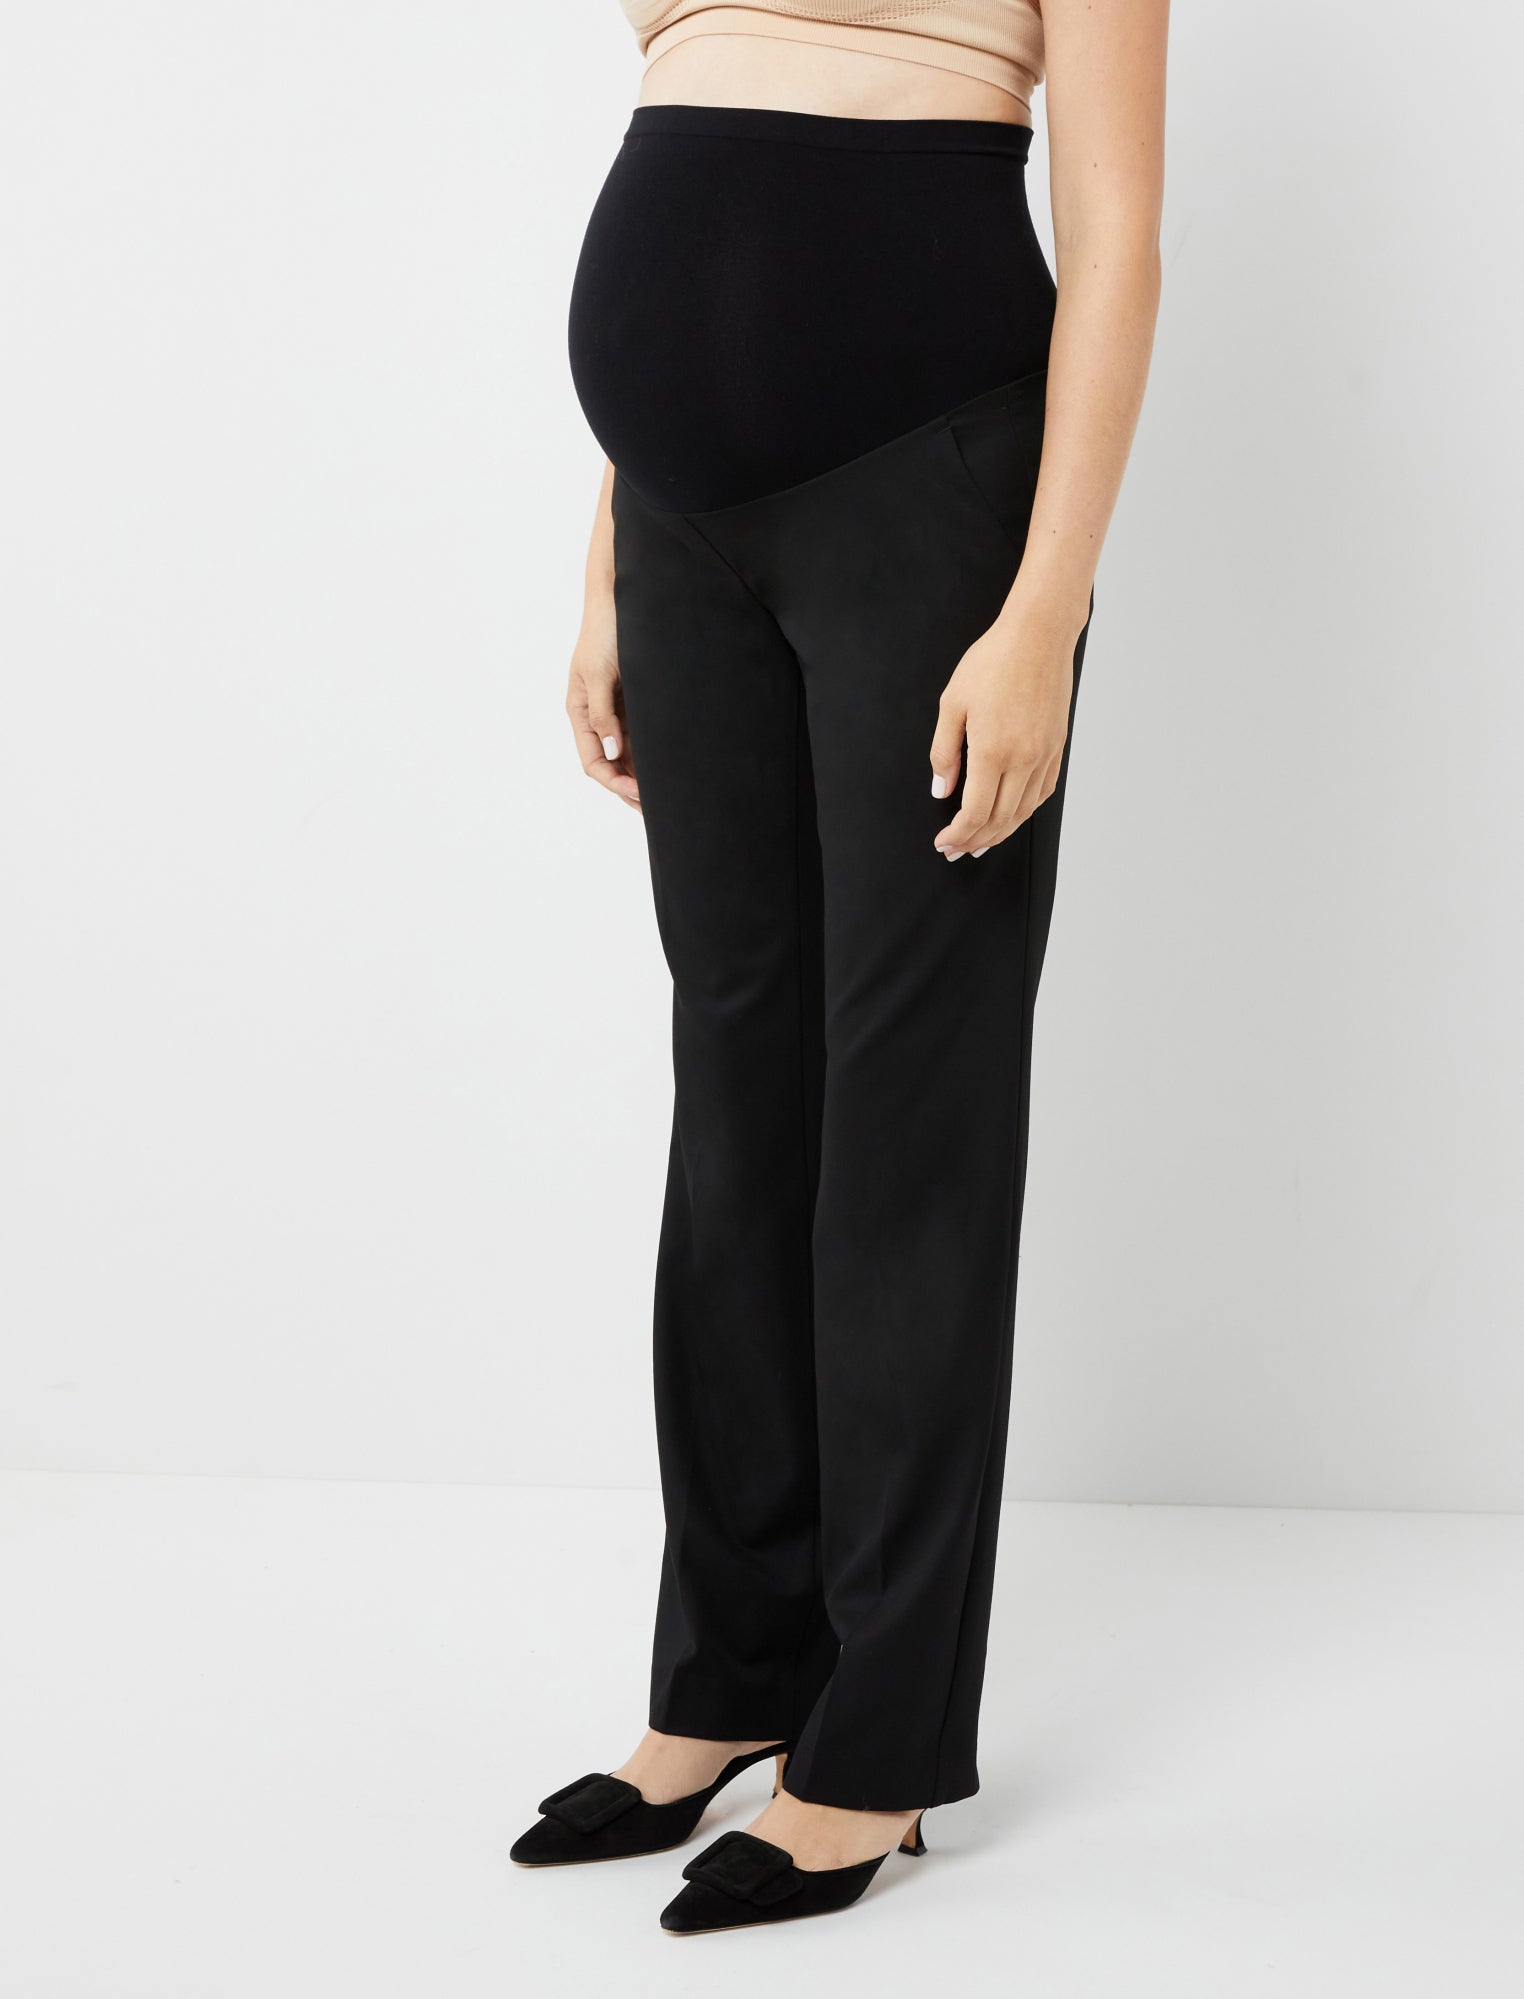 NEGJ Maternity Pants Comfortable Stretch Over Bump Women Pregnancy